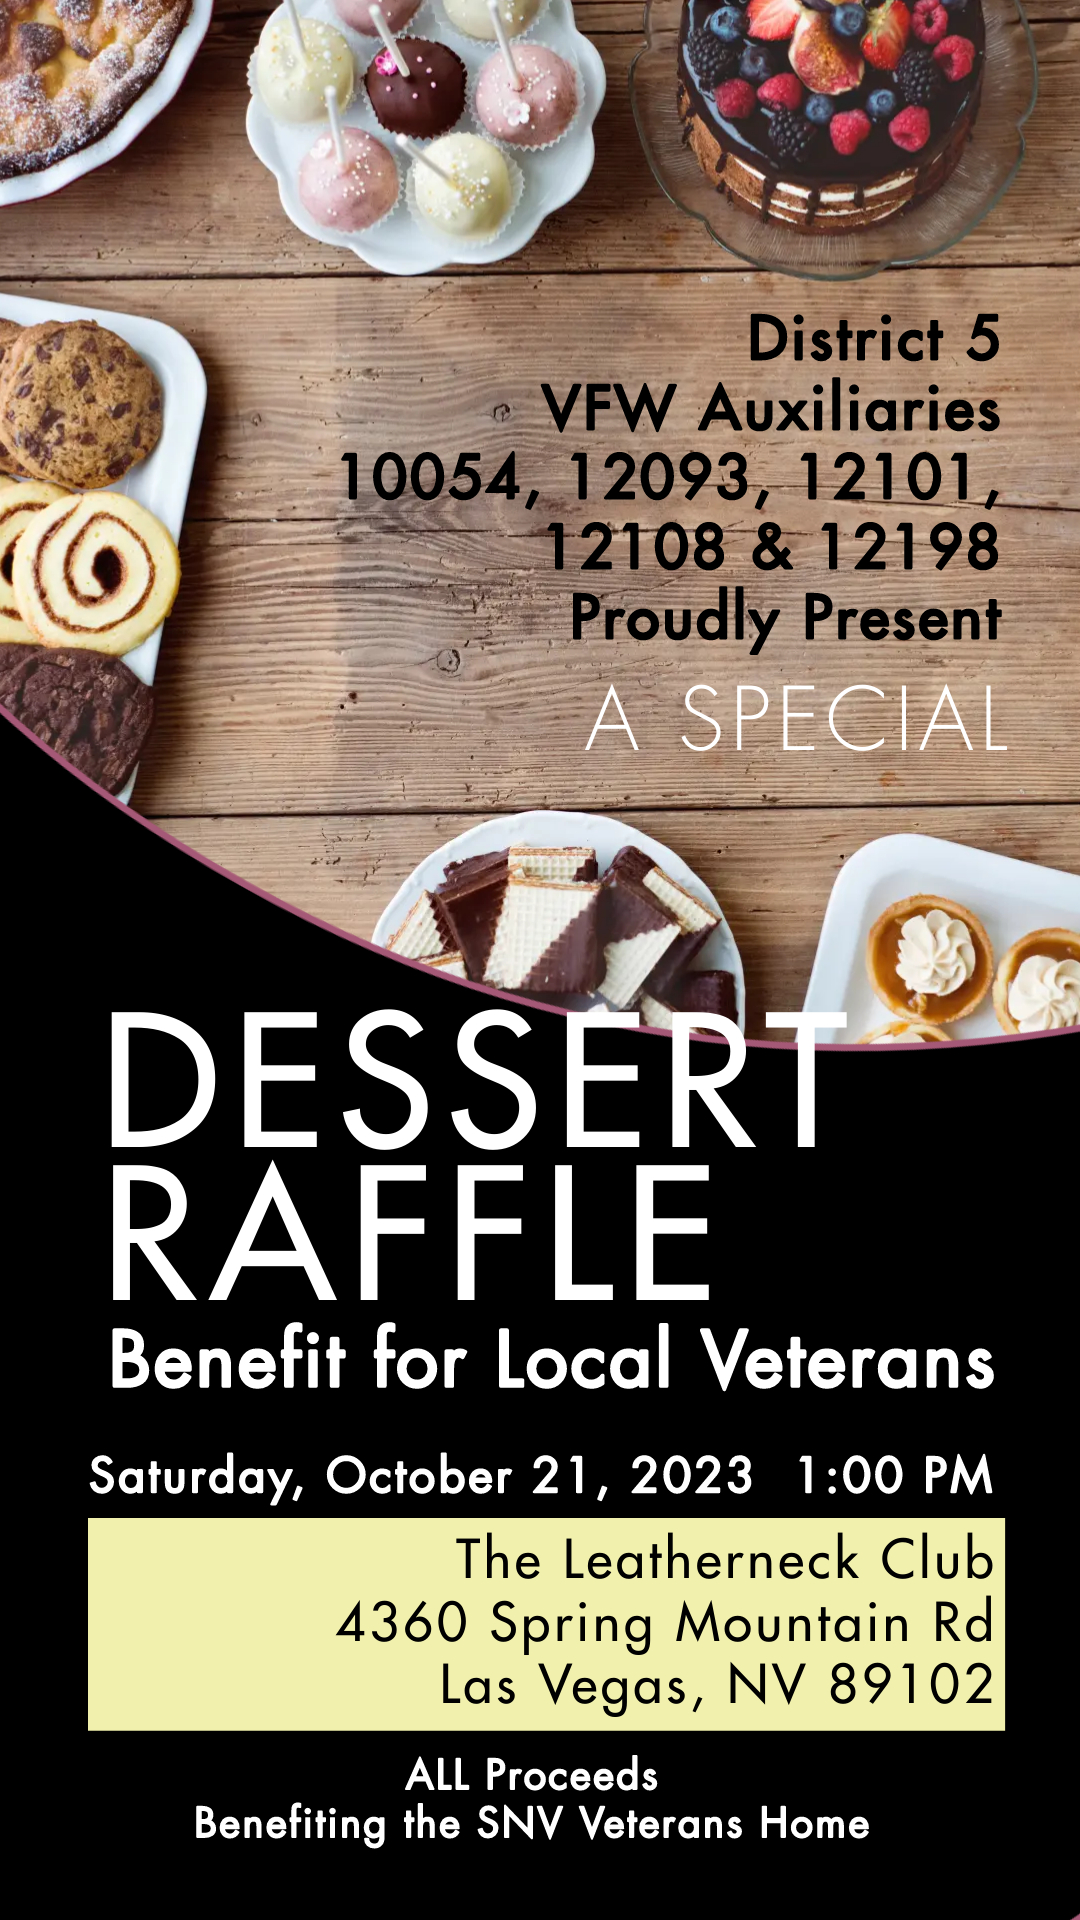 Dessert Raffle Benefit For Local Veterans flyer – October 21, 2023